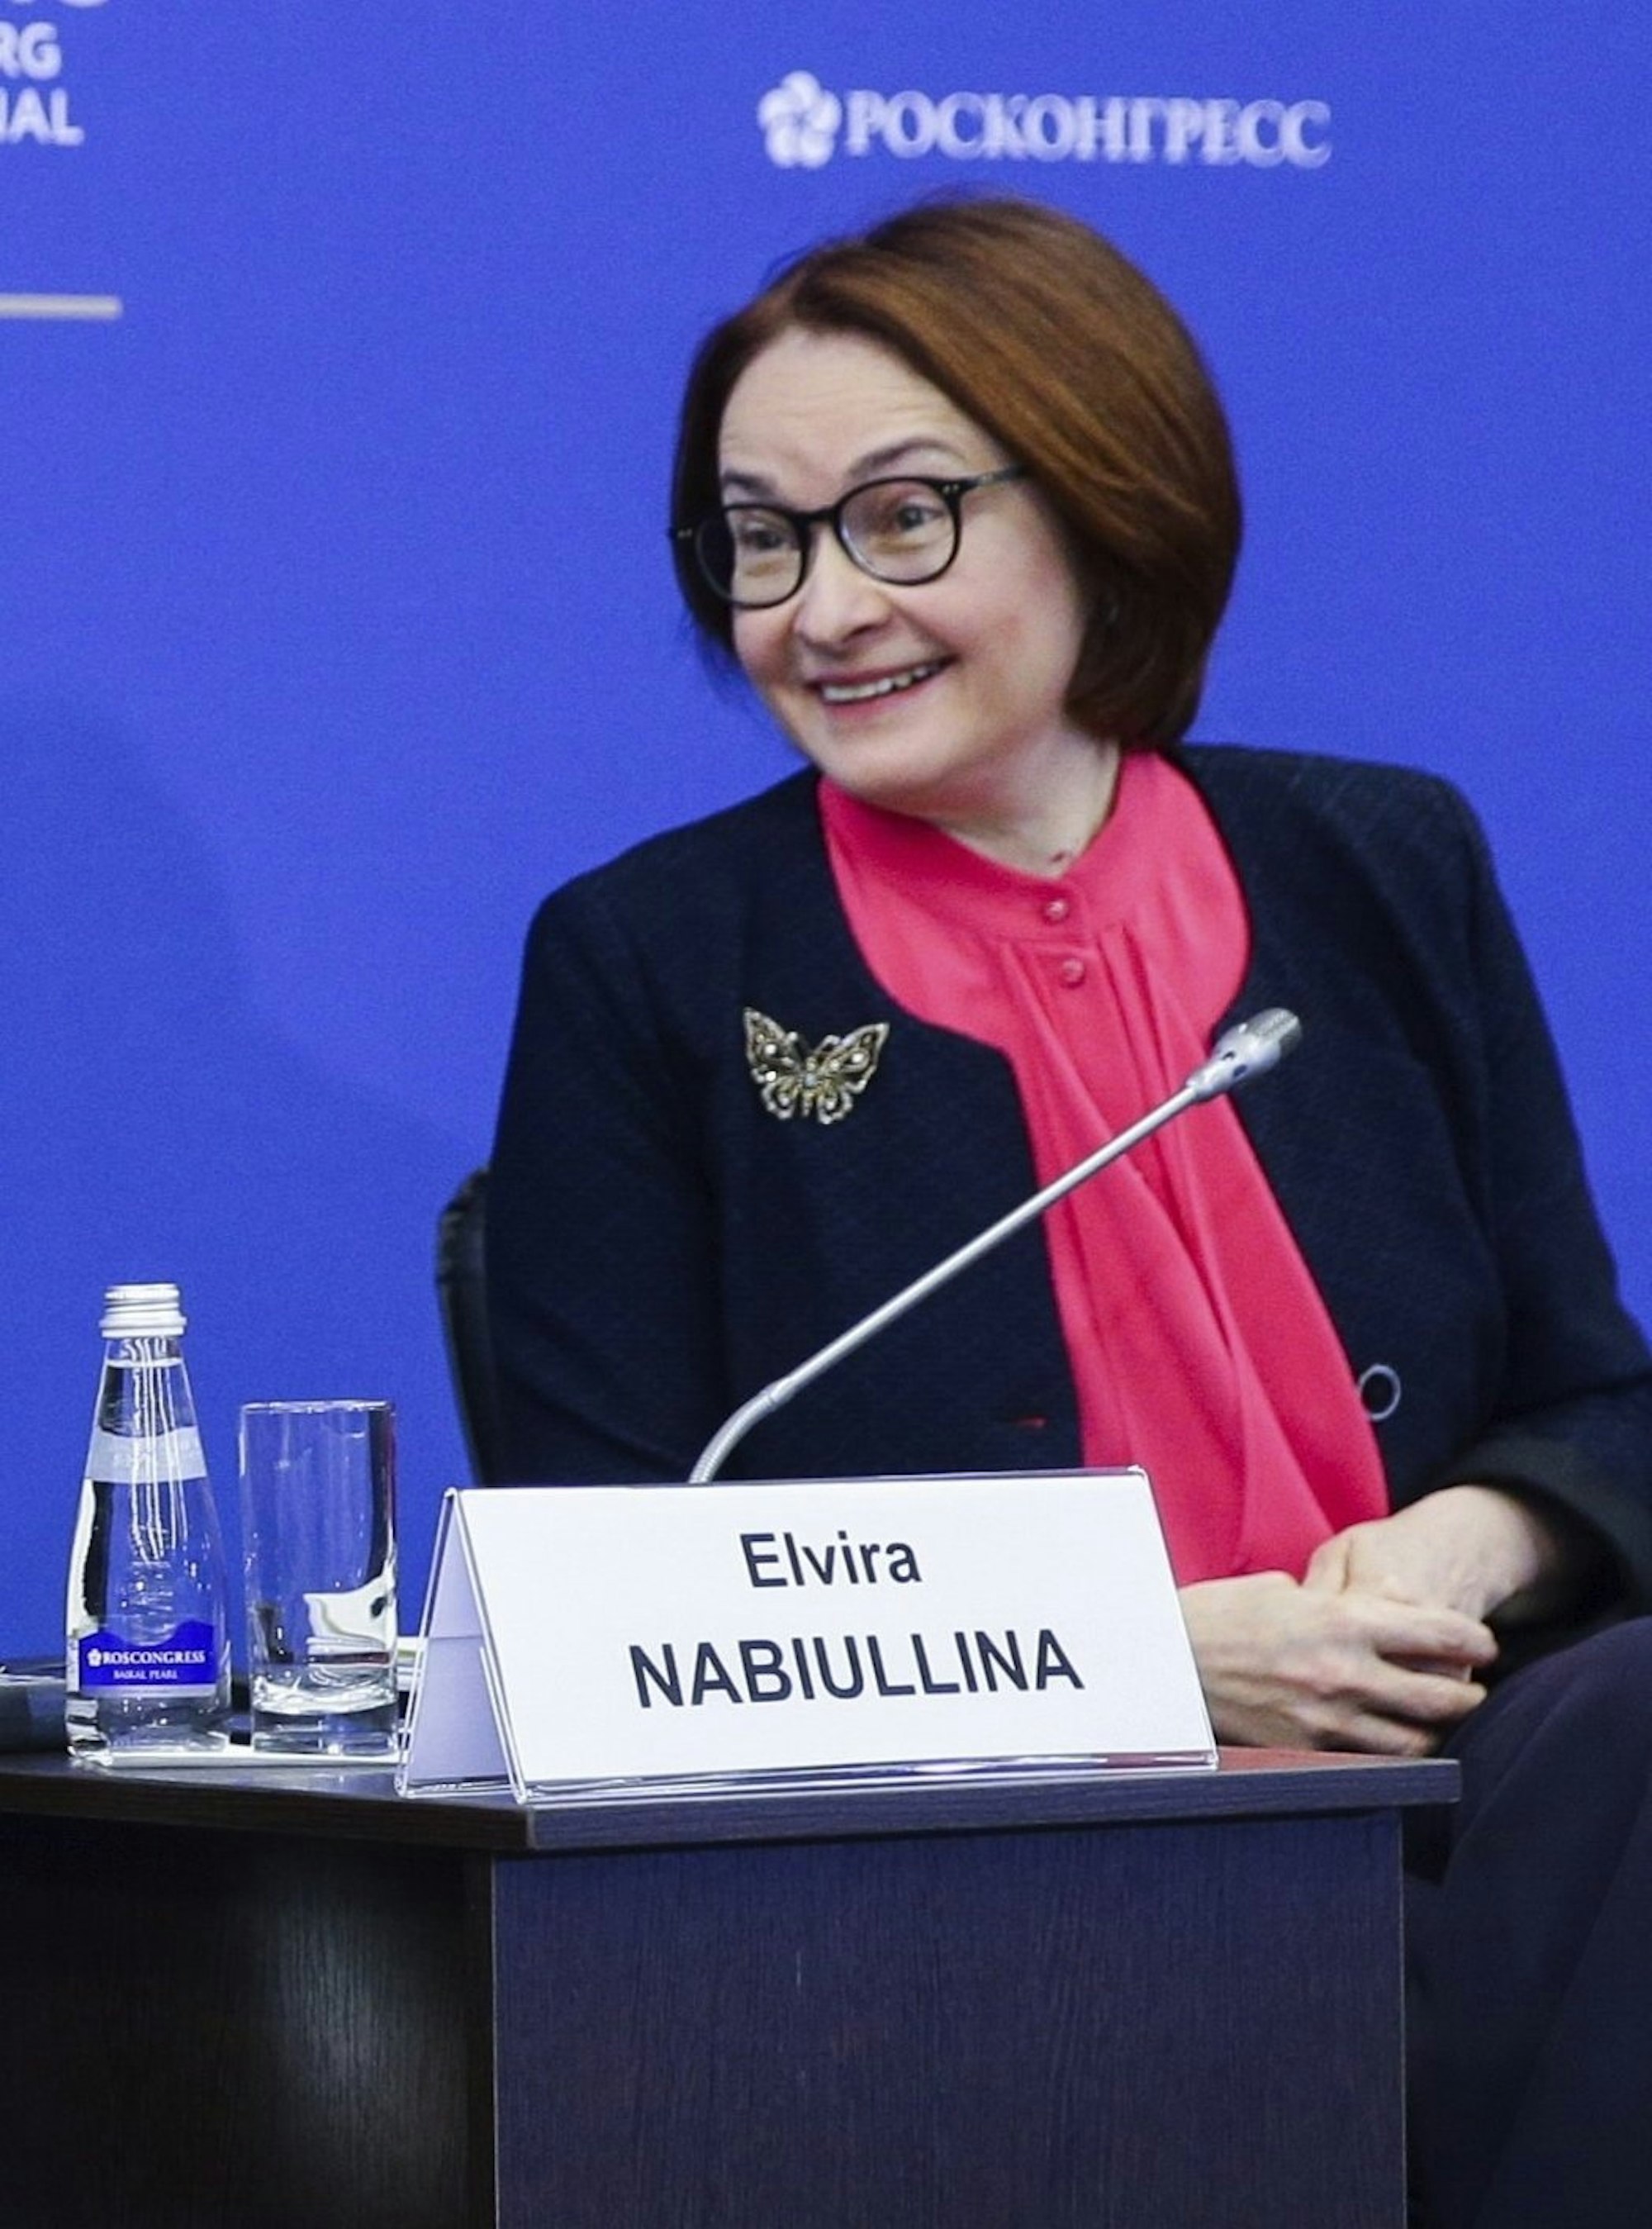 Elwira Nabiullina